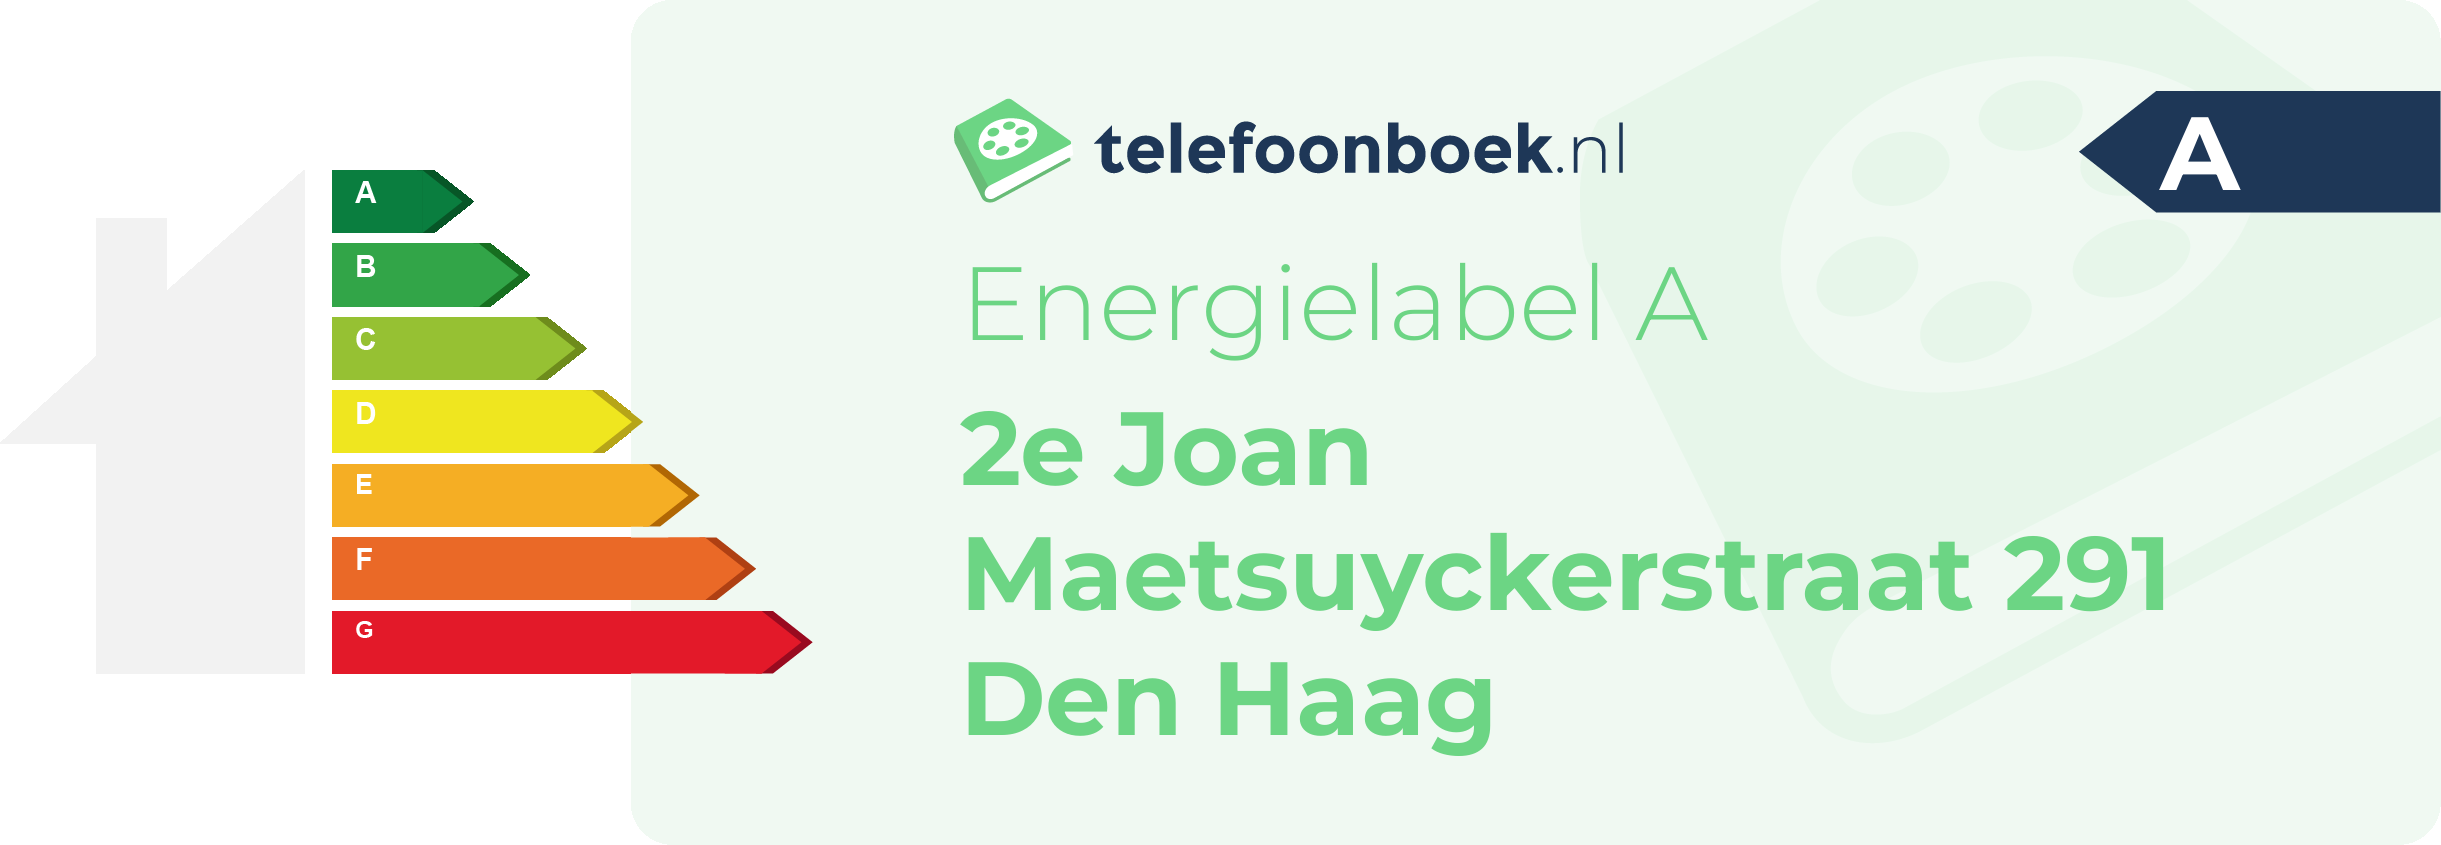 Energielabel 2e Joan Maetsuyckerstraat 291 Den Haag